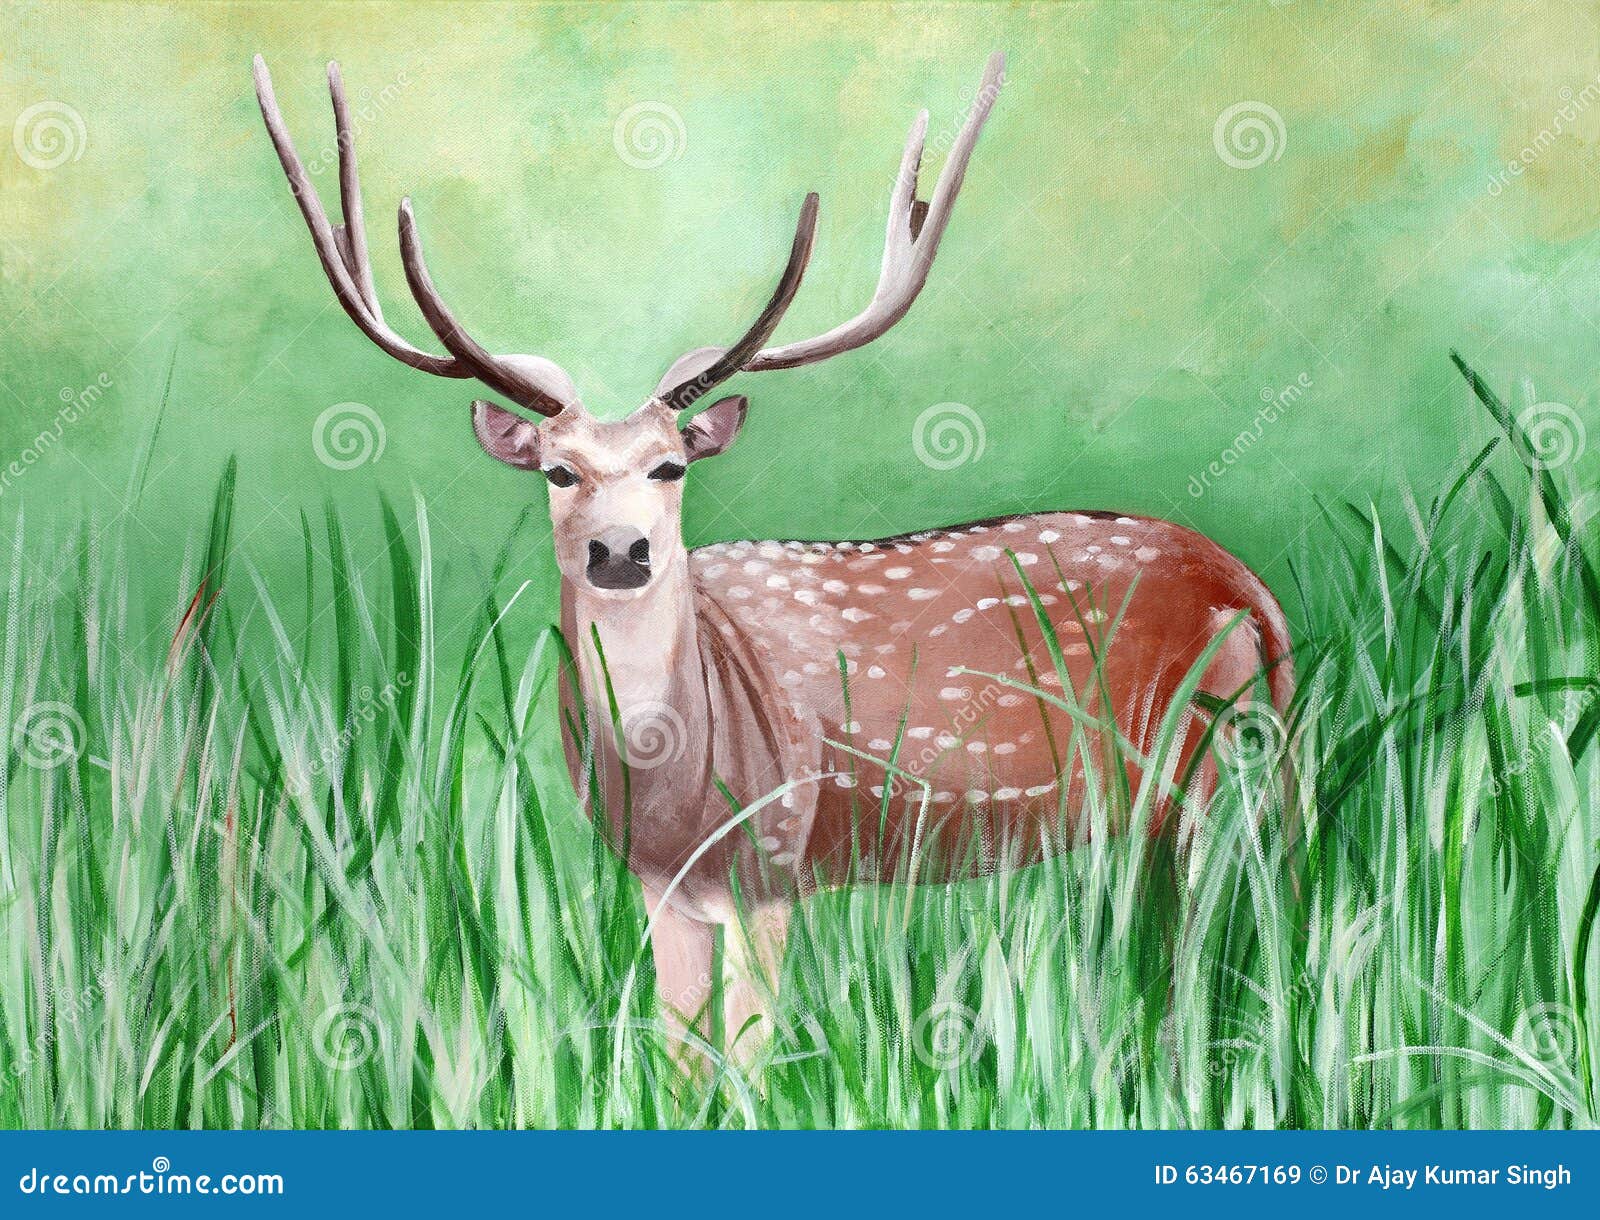 original painting of a male cheetal deer in the grassland of dhikala, jim corbett